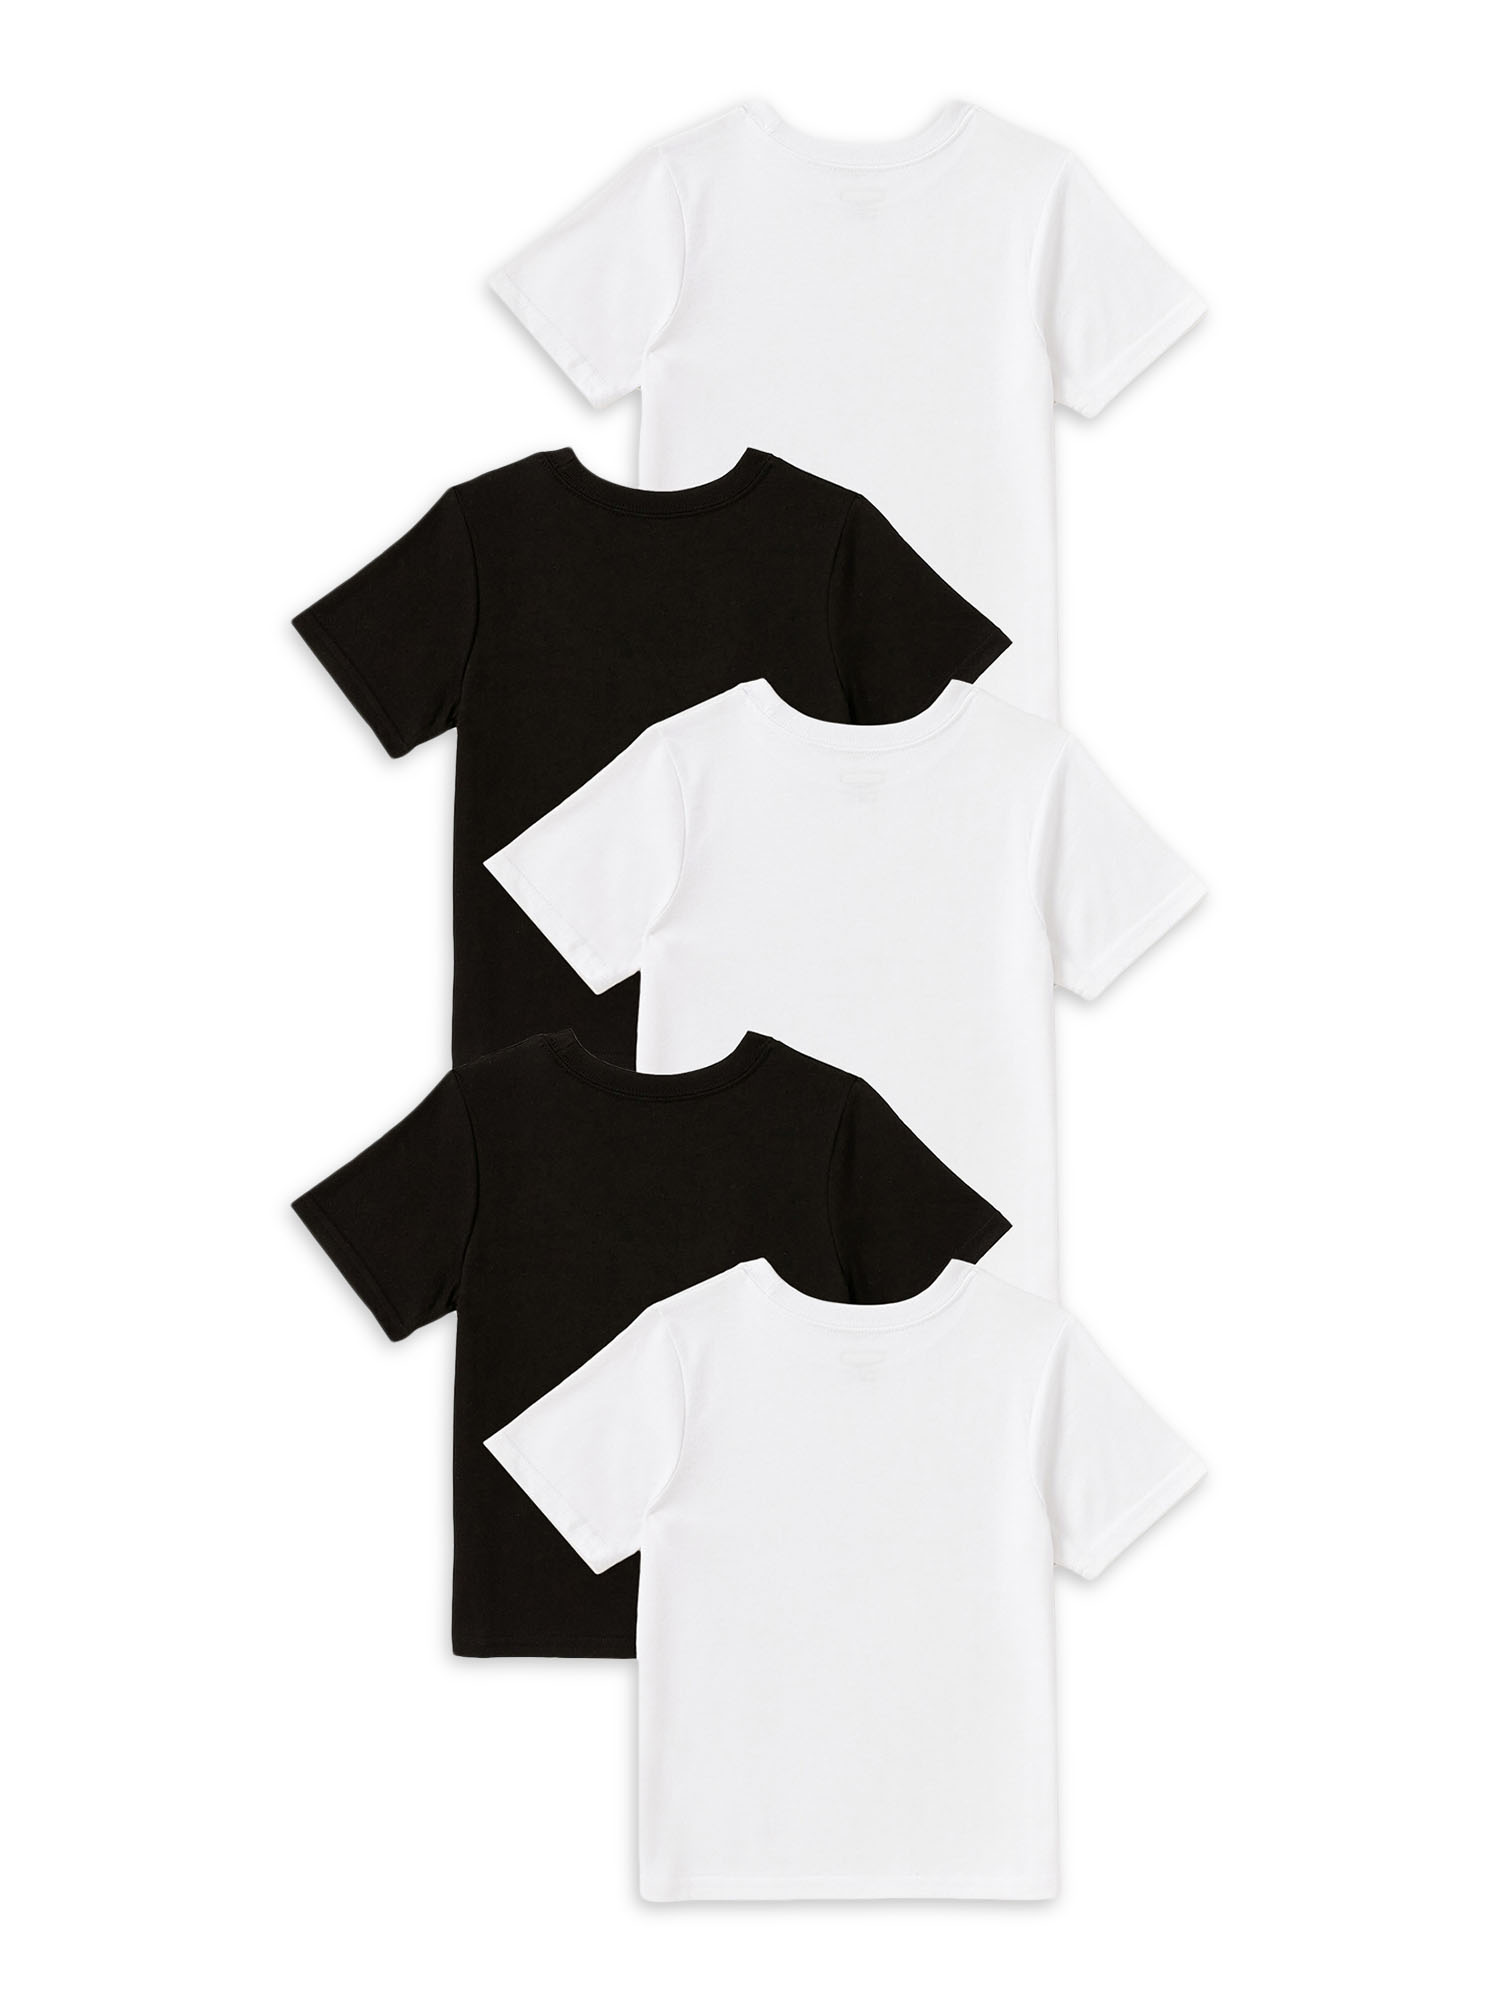 Garanimals Toddler Boy Basic T-Shirts Multipack, 5-Pack, Sizes 12M-5T - image 3 of 4